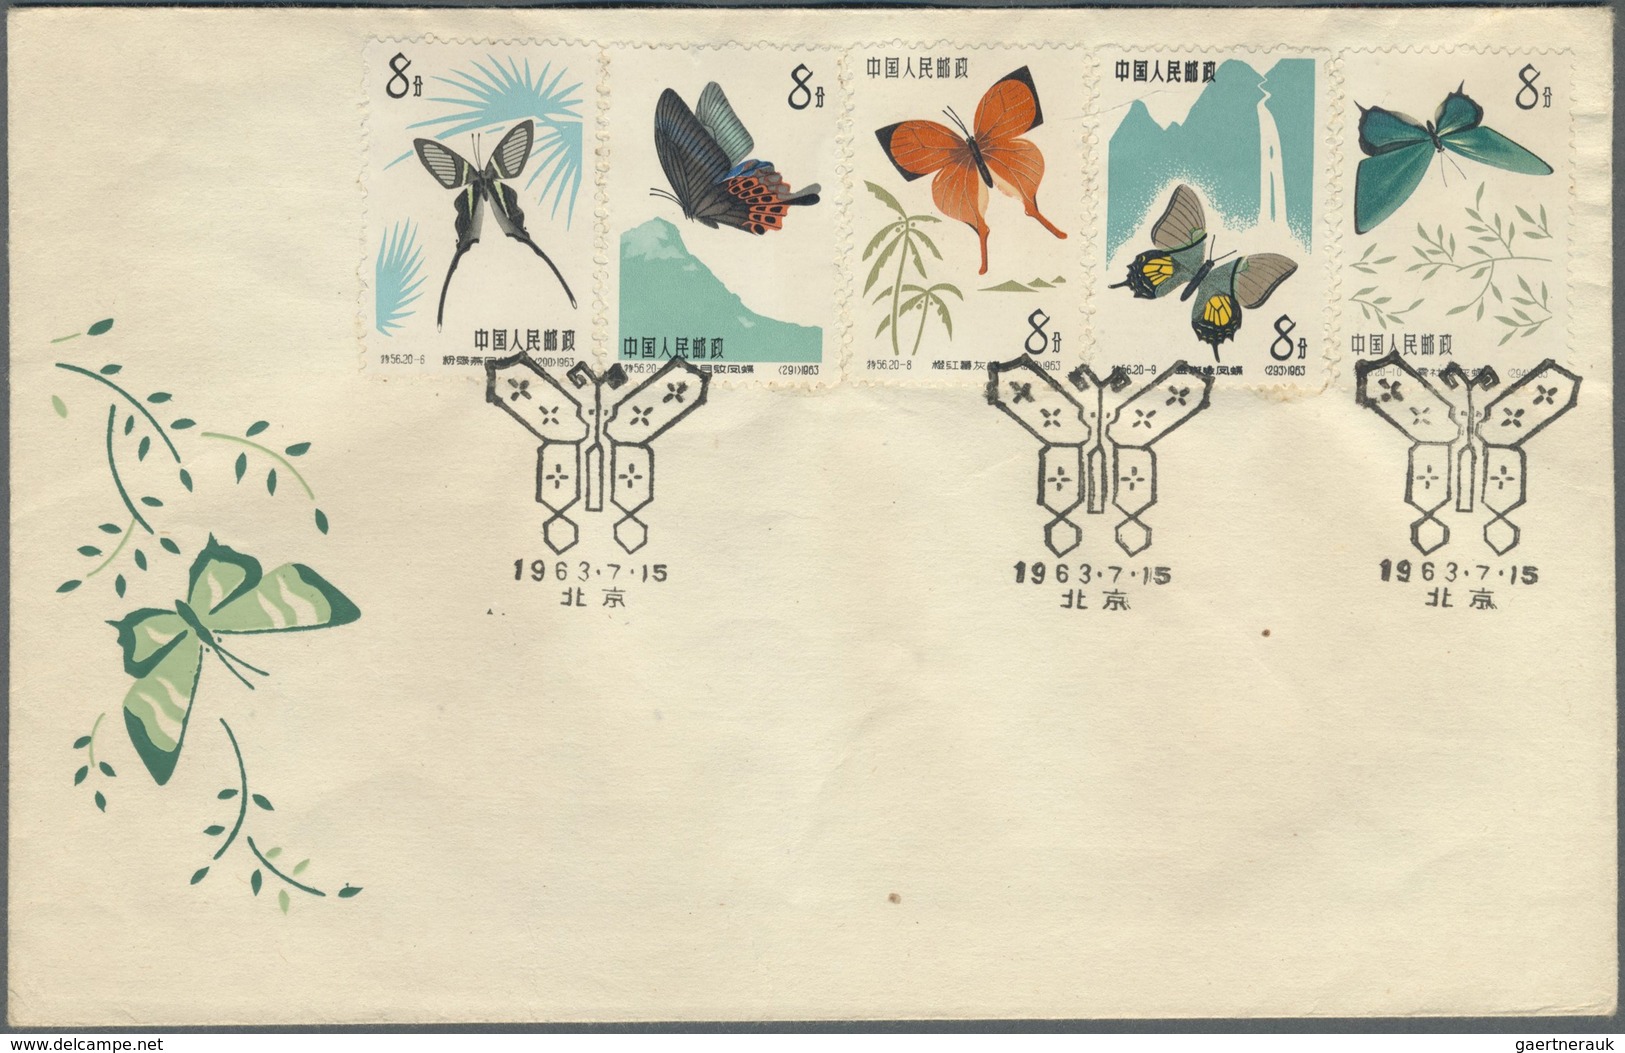 Br/GA China - Volksrepublik: 1910/1970 (ca.), lot of 49 covers/cards (incl. some Kiauchou, Portuguese Maca